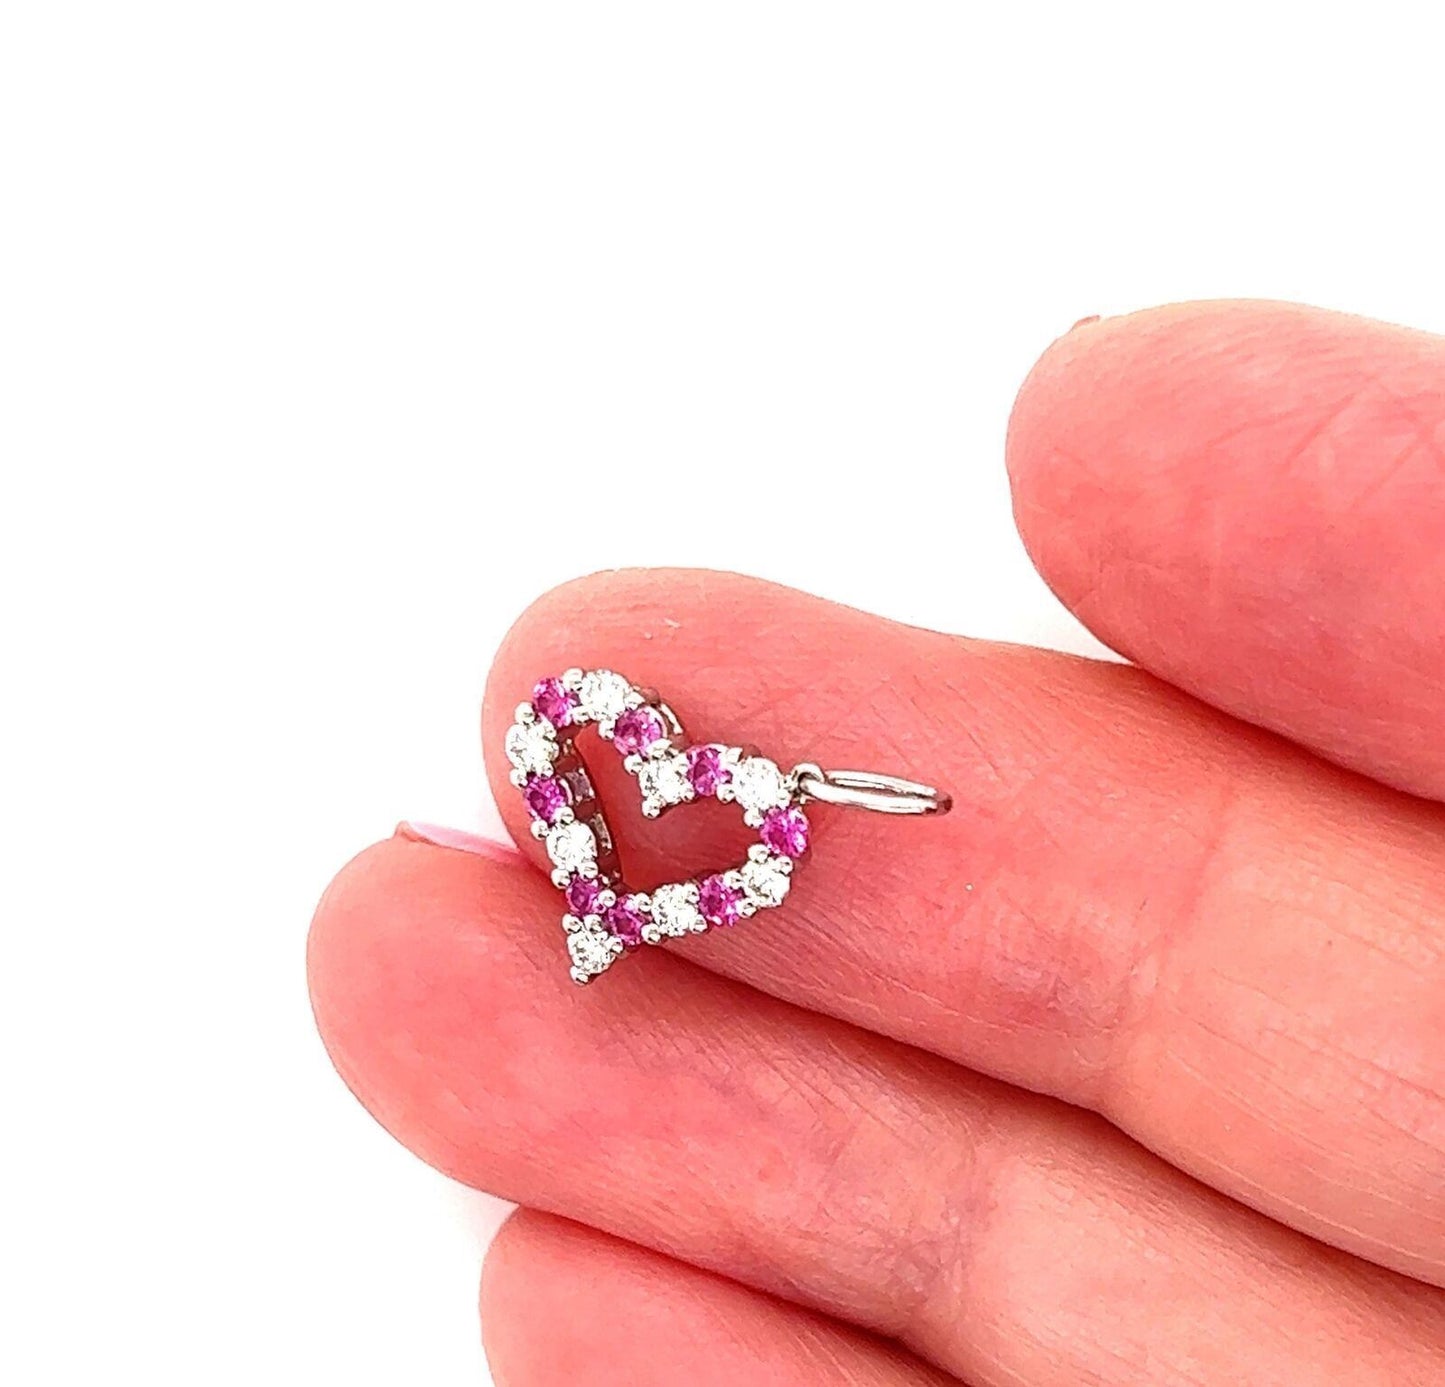 Tiffany & Co. Platinum Diamond Pink Sapphire Heart Charm Pendant